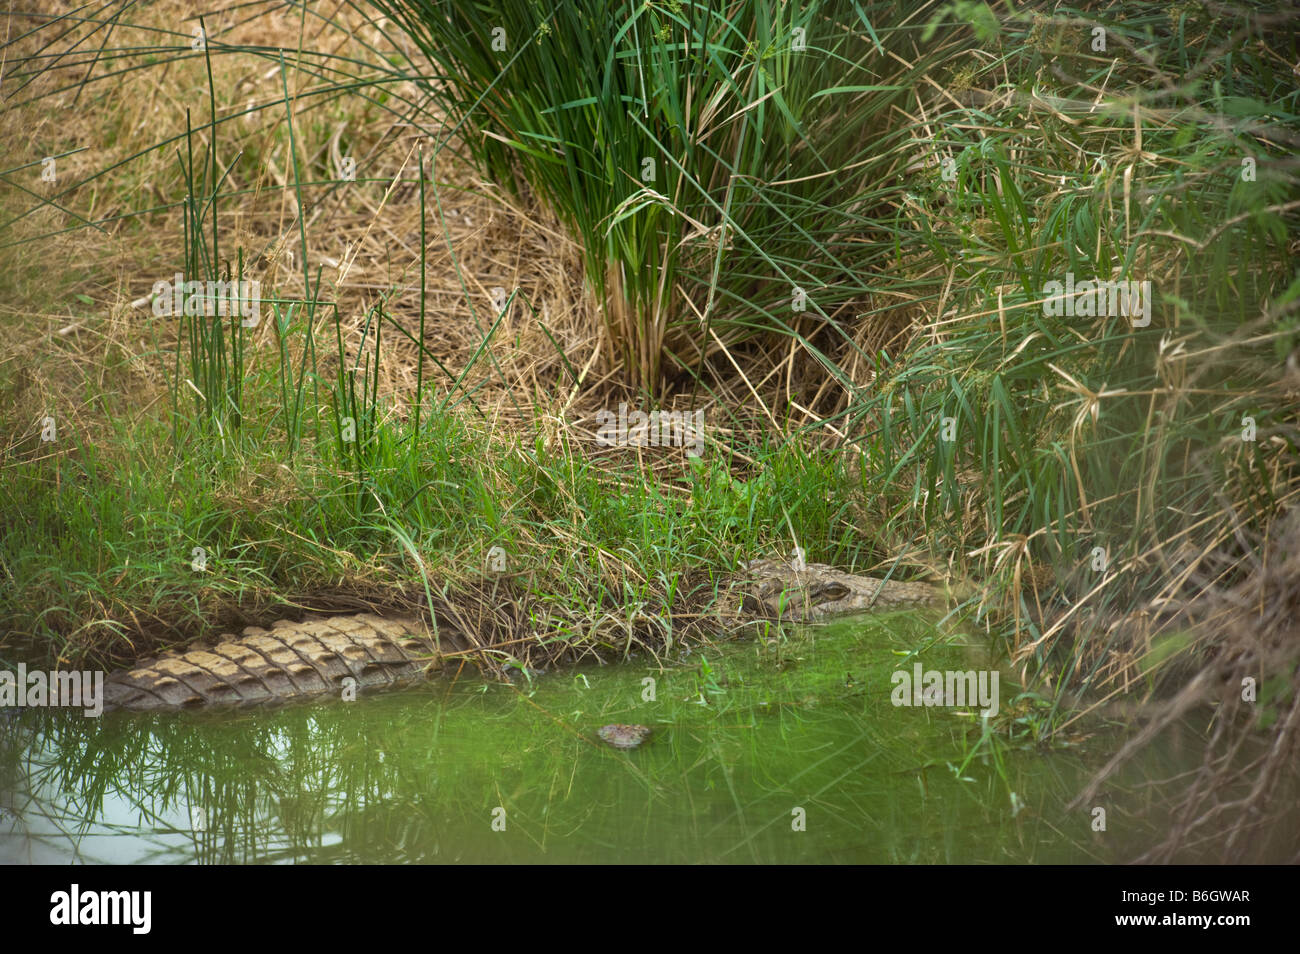 Sud-Afrika sud africa ben camuffati camouflage coccodrillo Crocodylus niloticus giacenti a waterhole ricoperte di erba in attesa Foto Stock